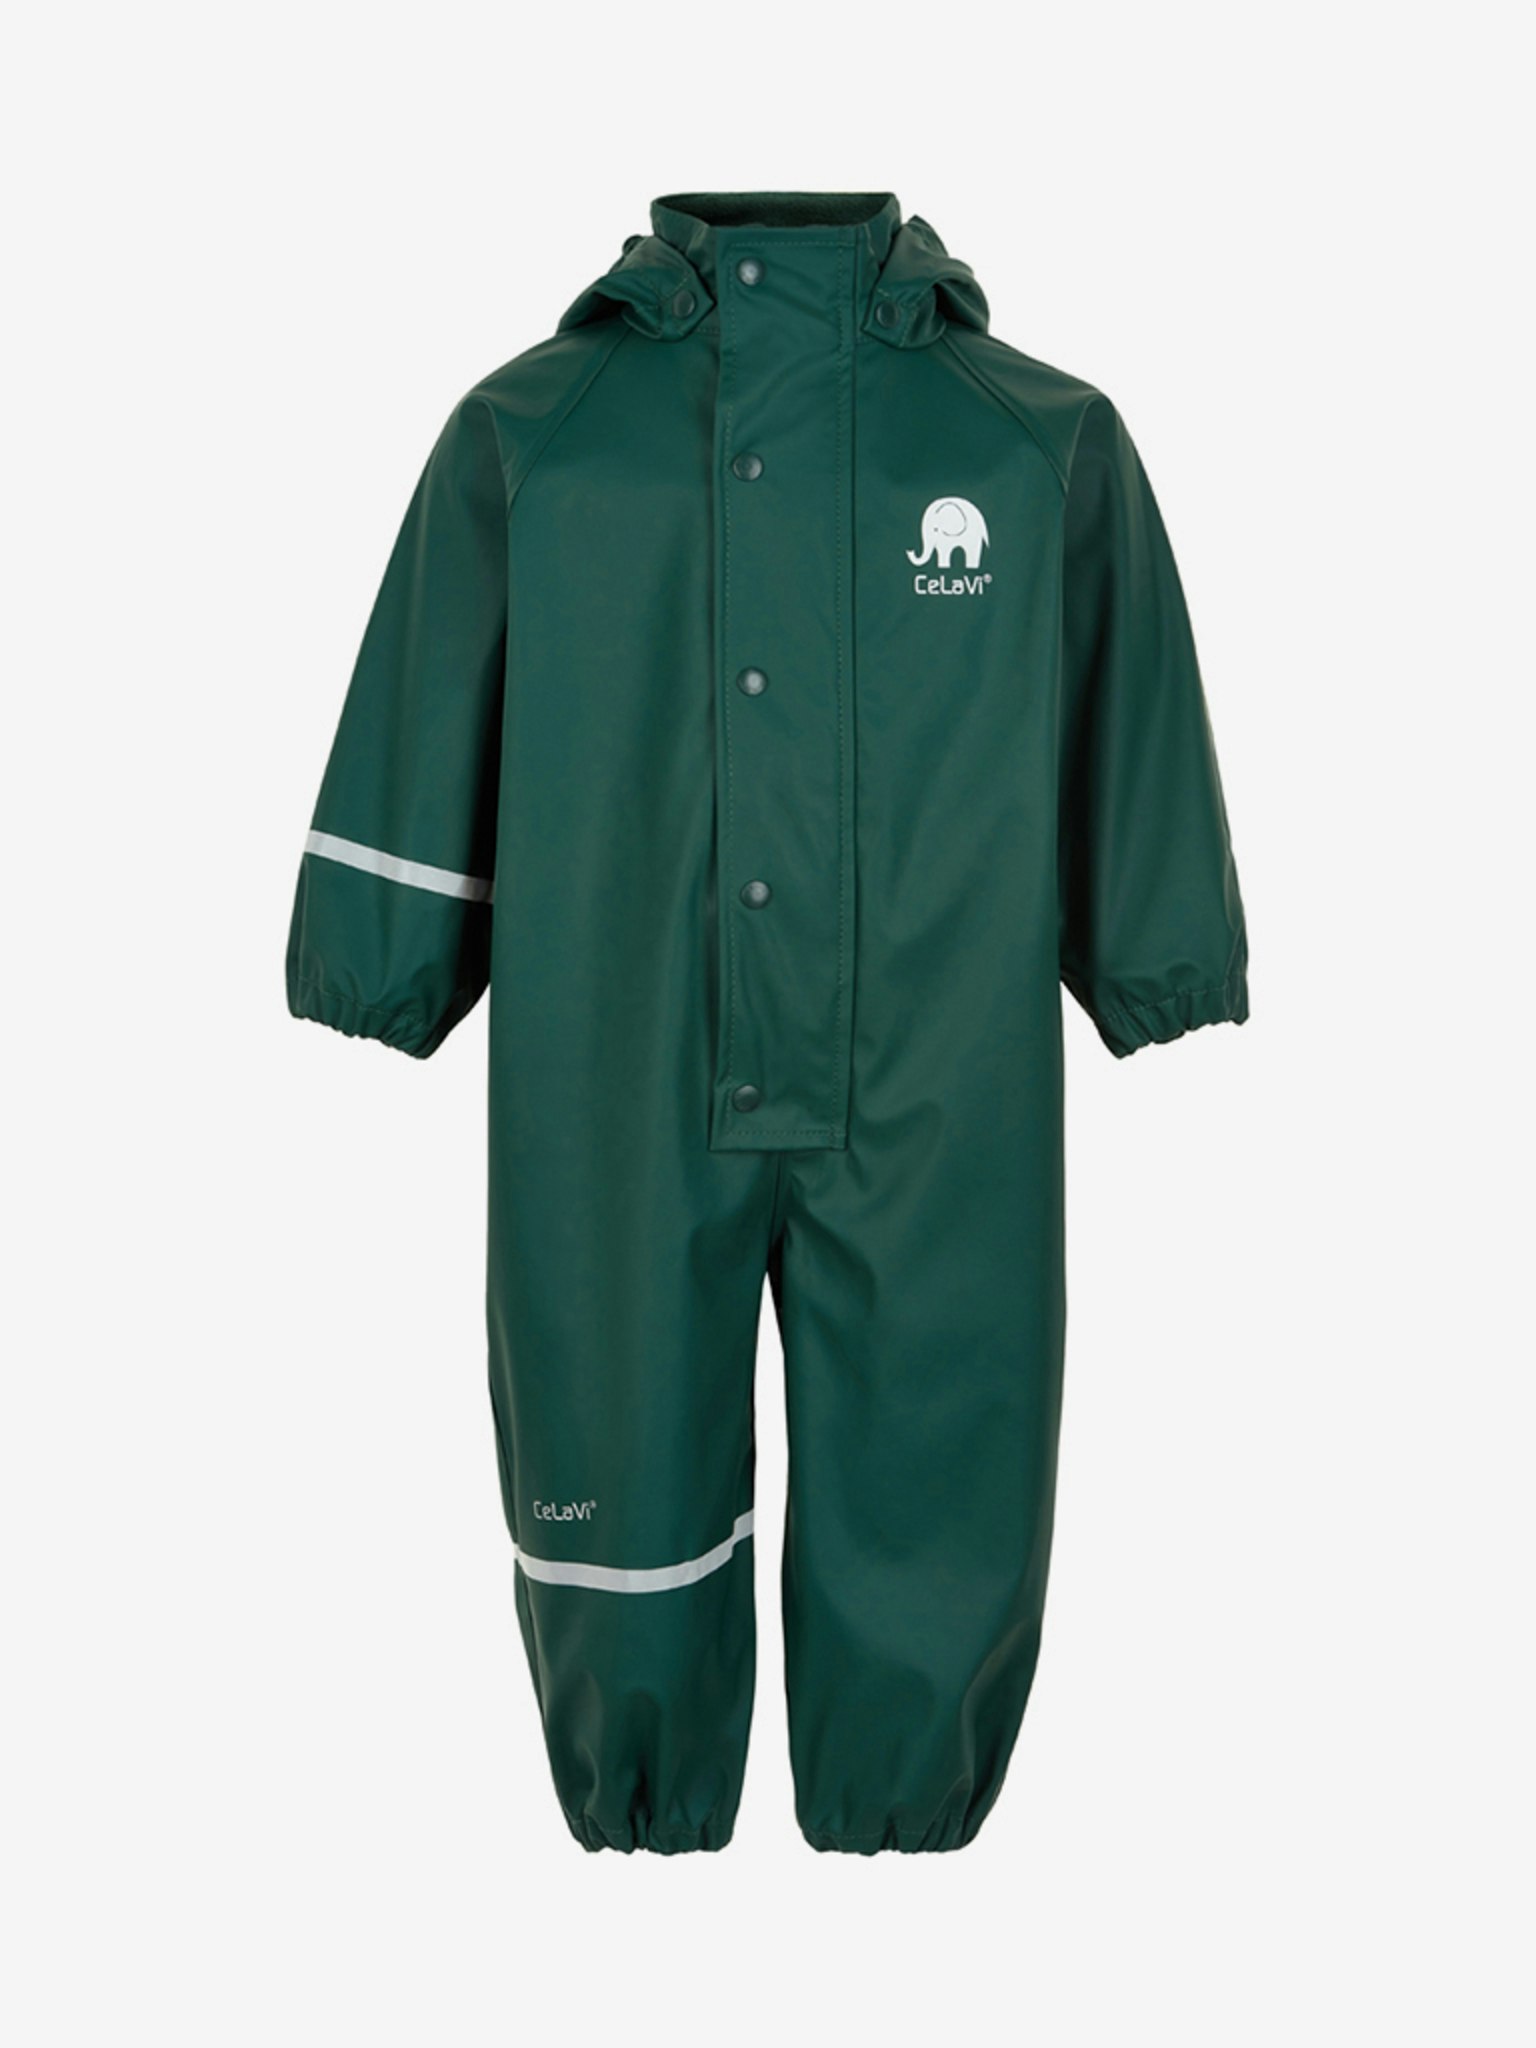 CeLaVi - Rainwear Suit -Solid PU/ Regnoverall- Ponderosa Pine